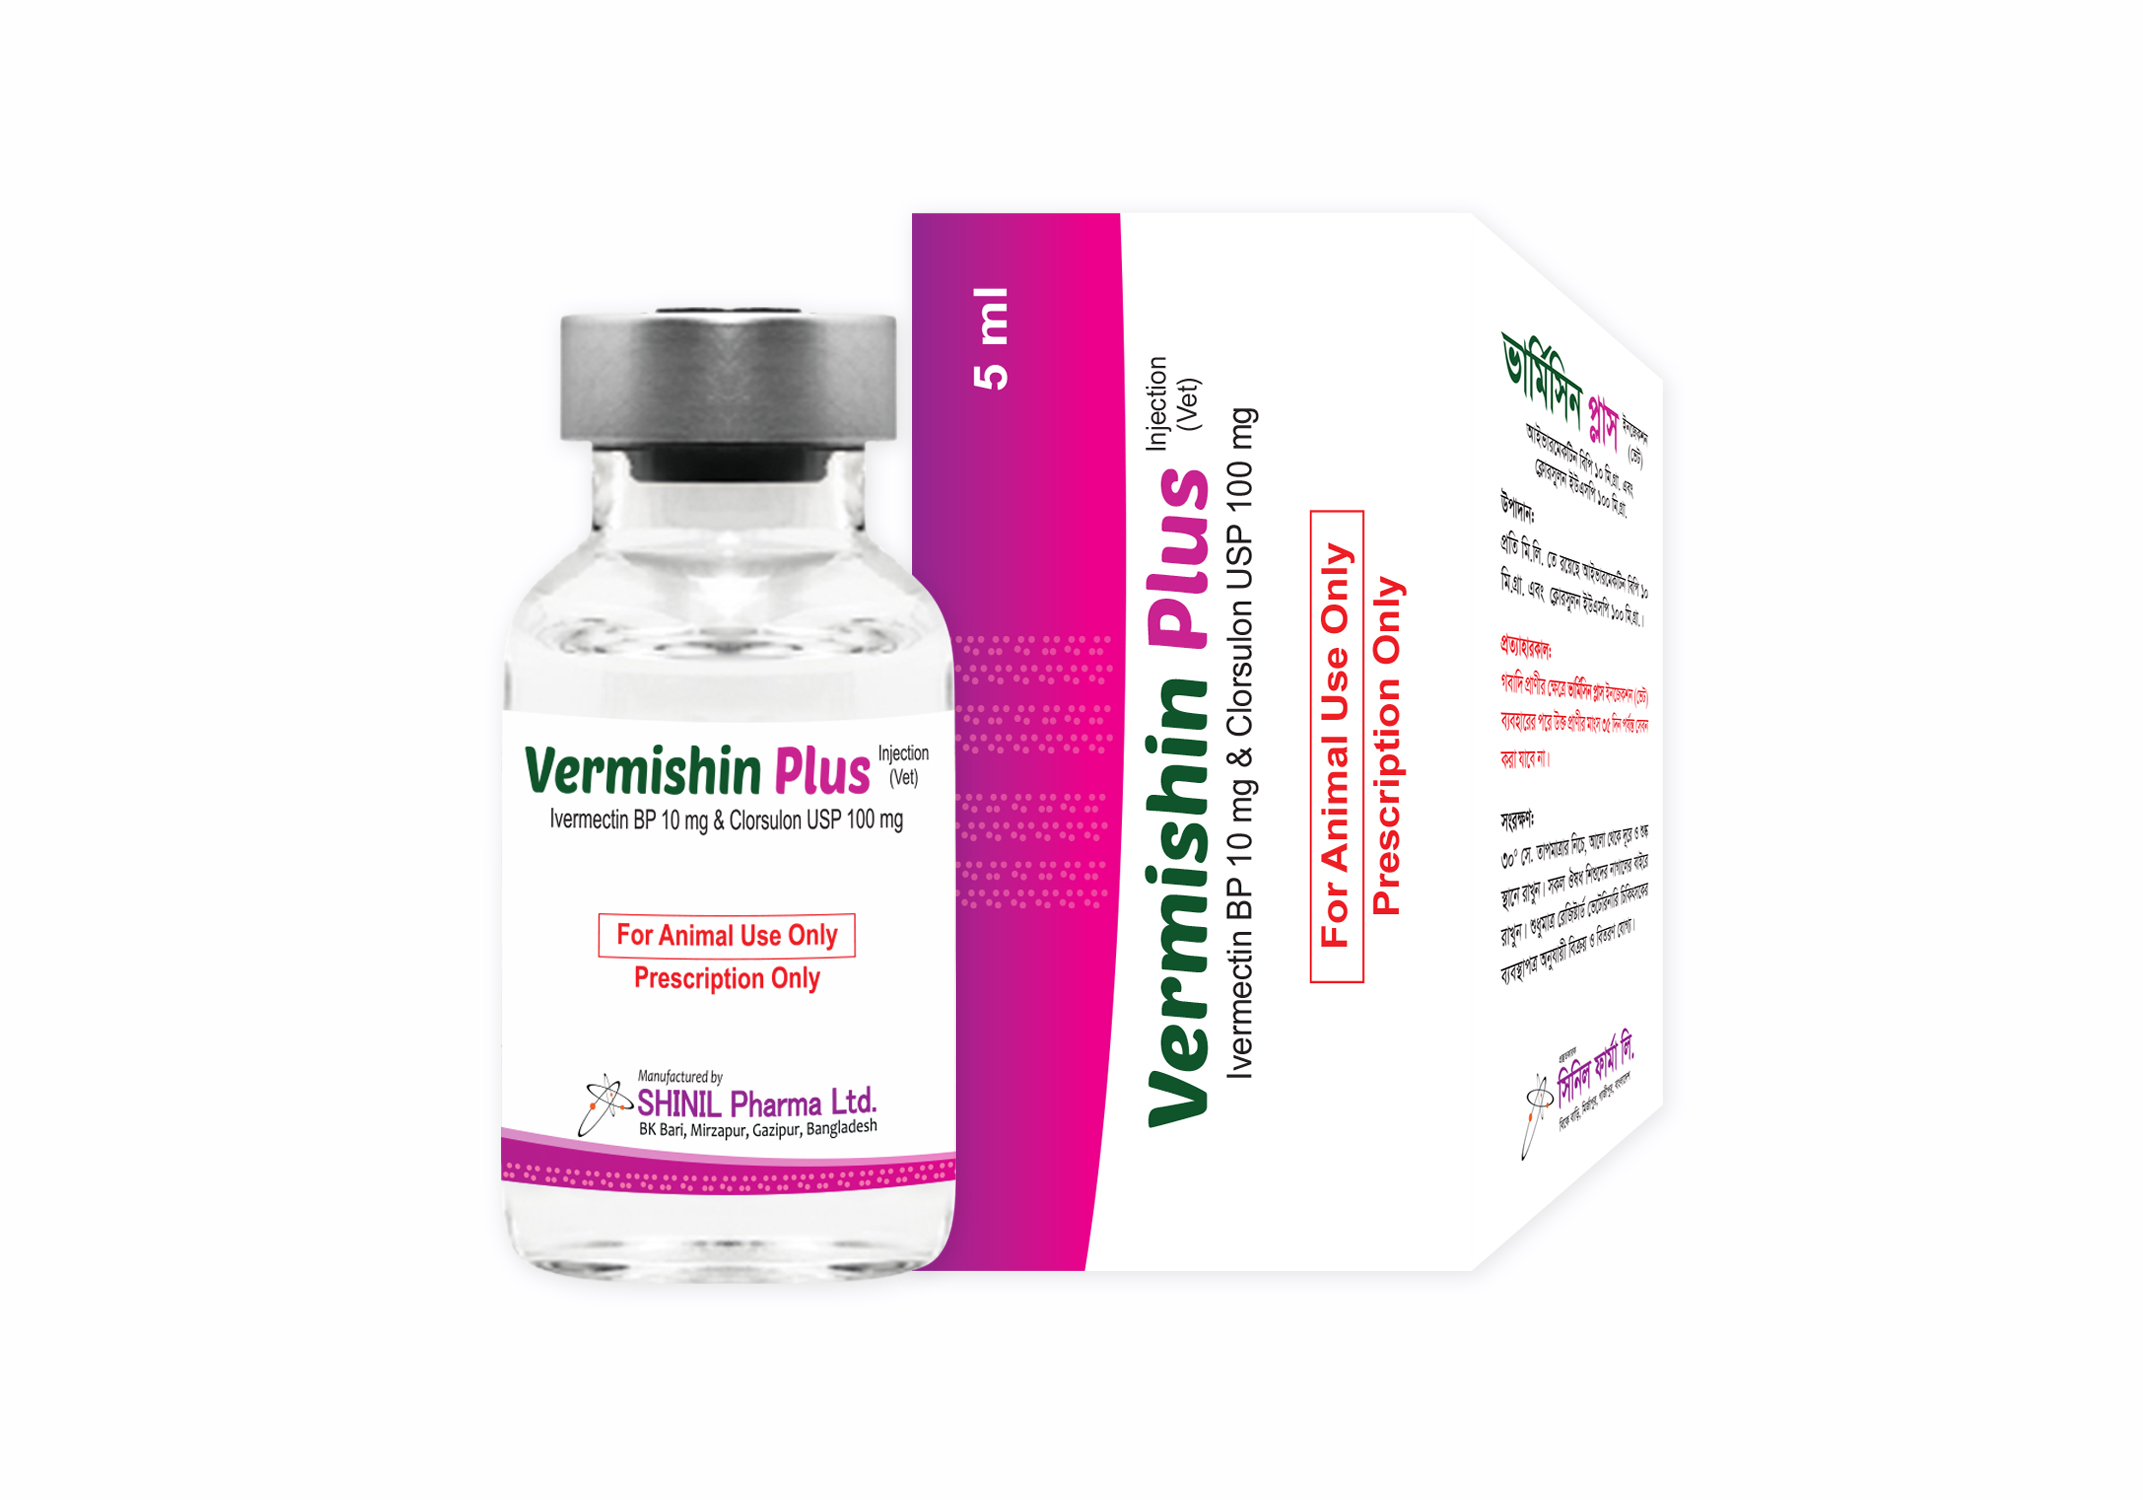 Vermishin Plus (Vet) Injection